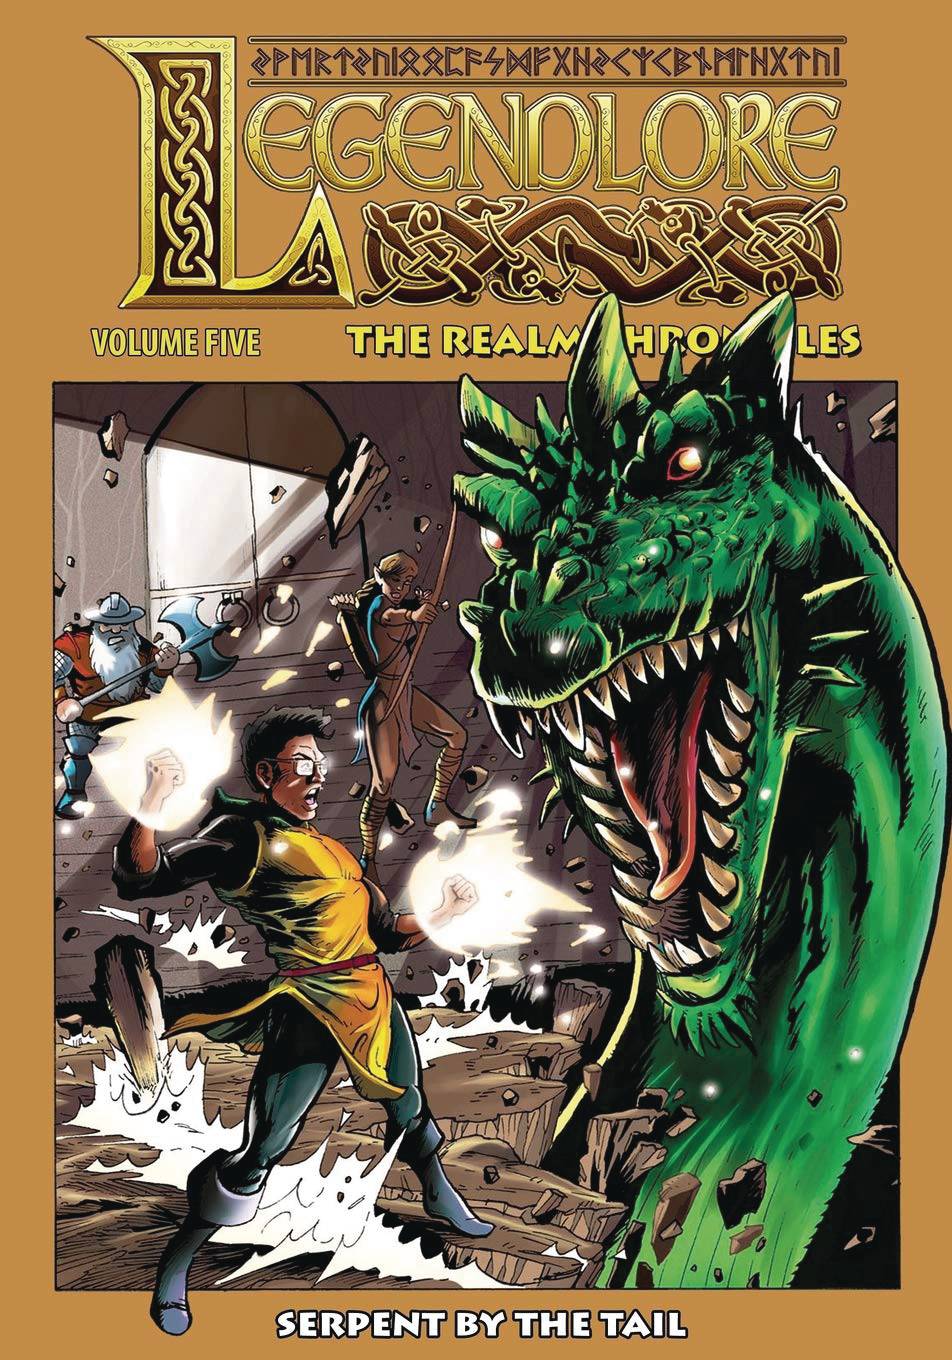 Legendlore Realm Chronicles Graphic Novel Volume 5